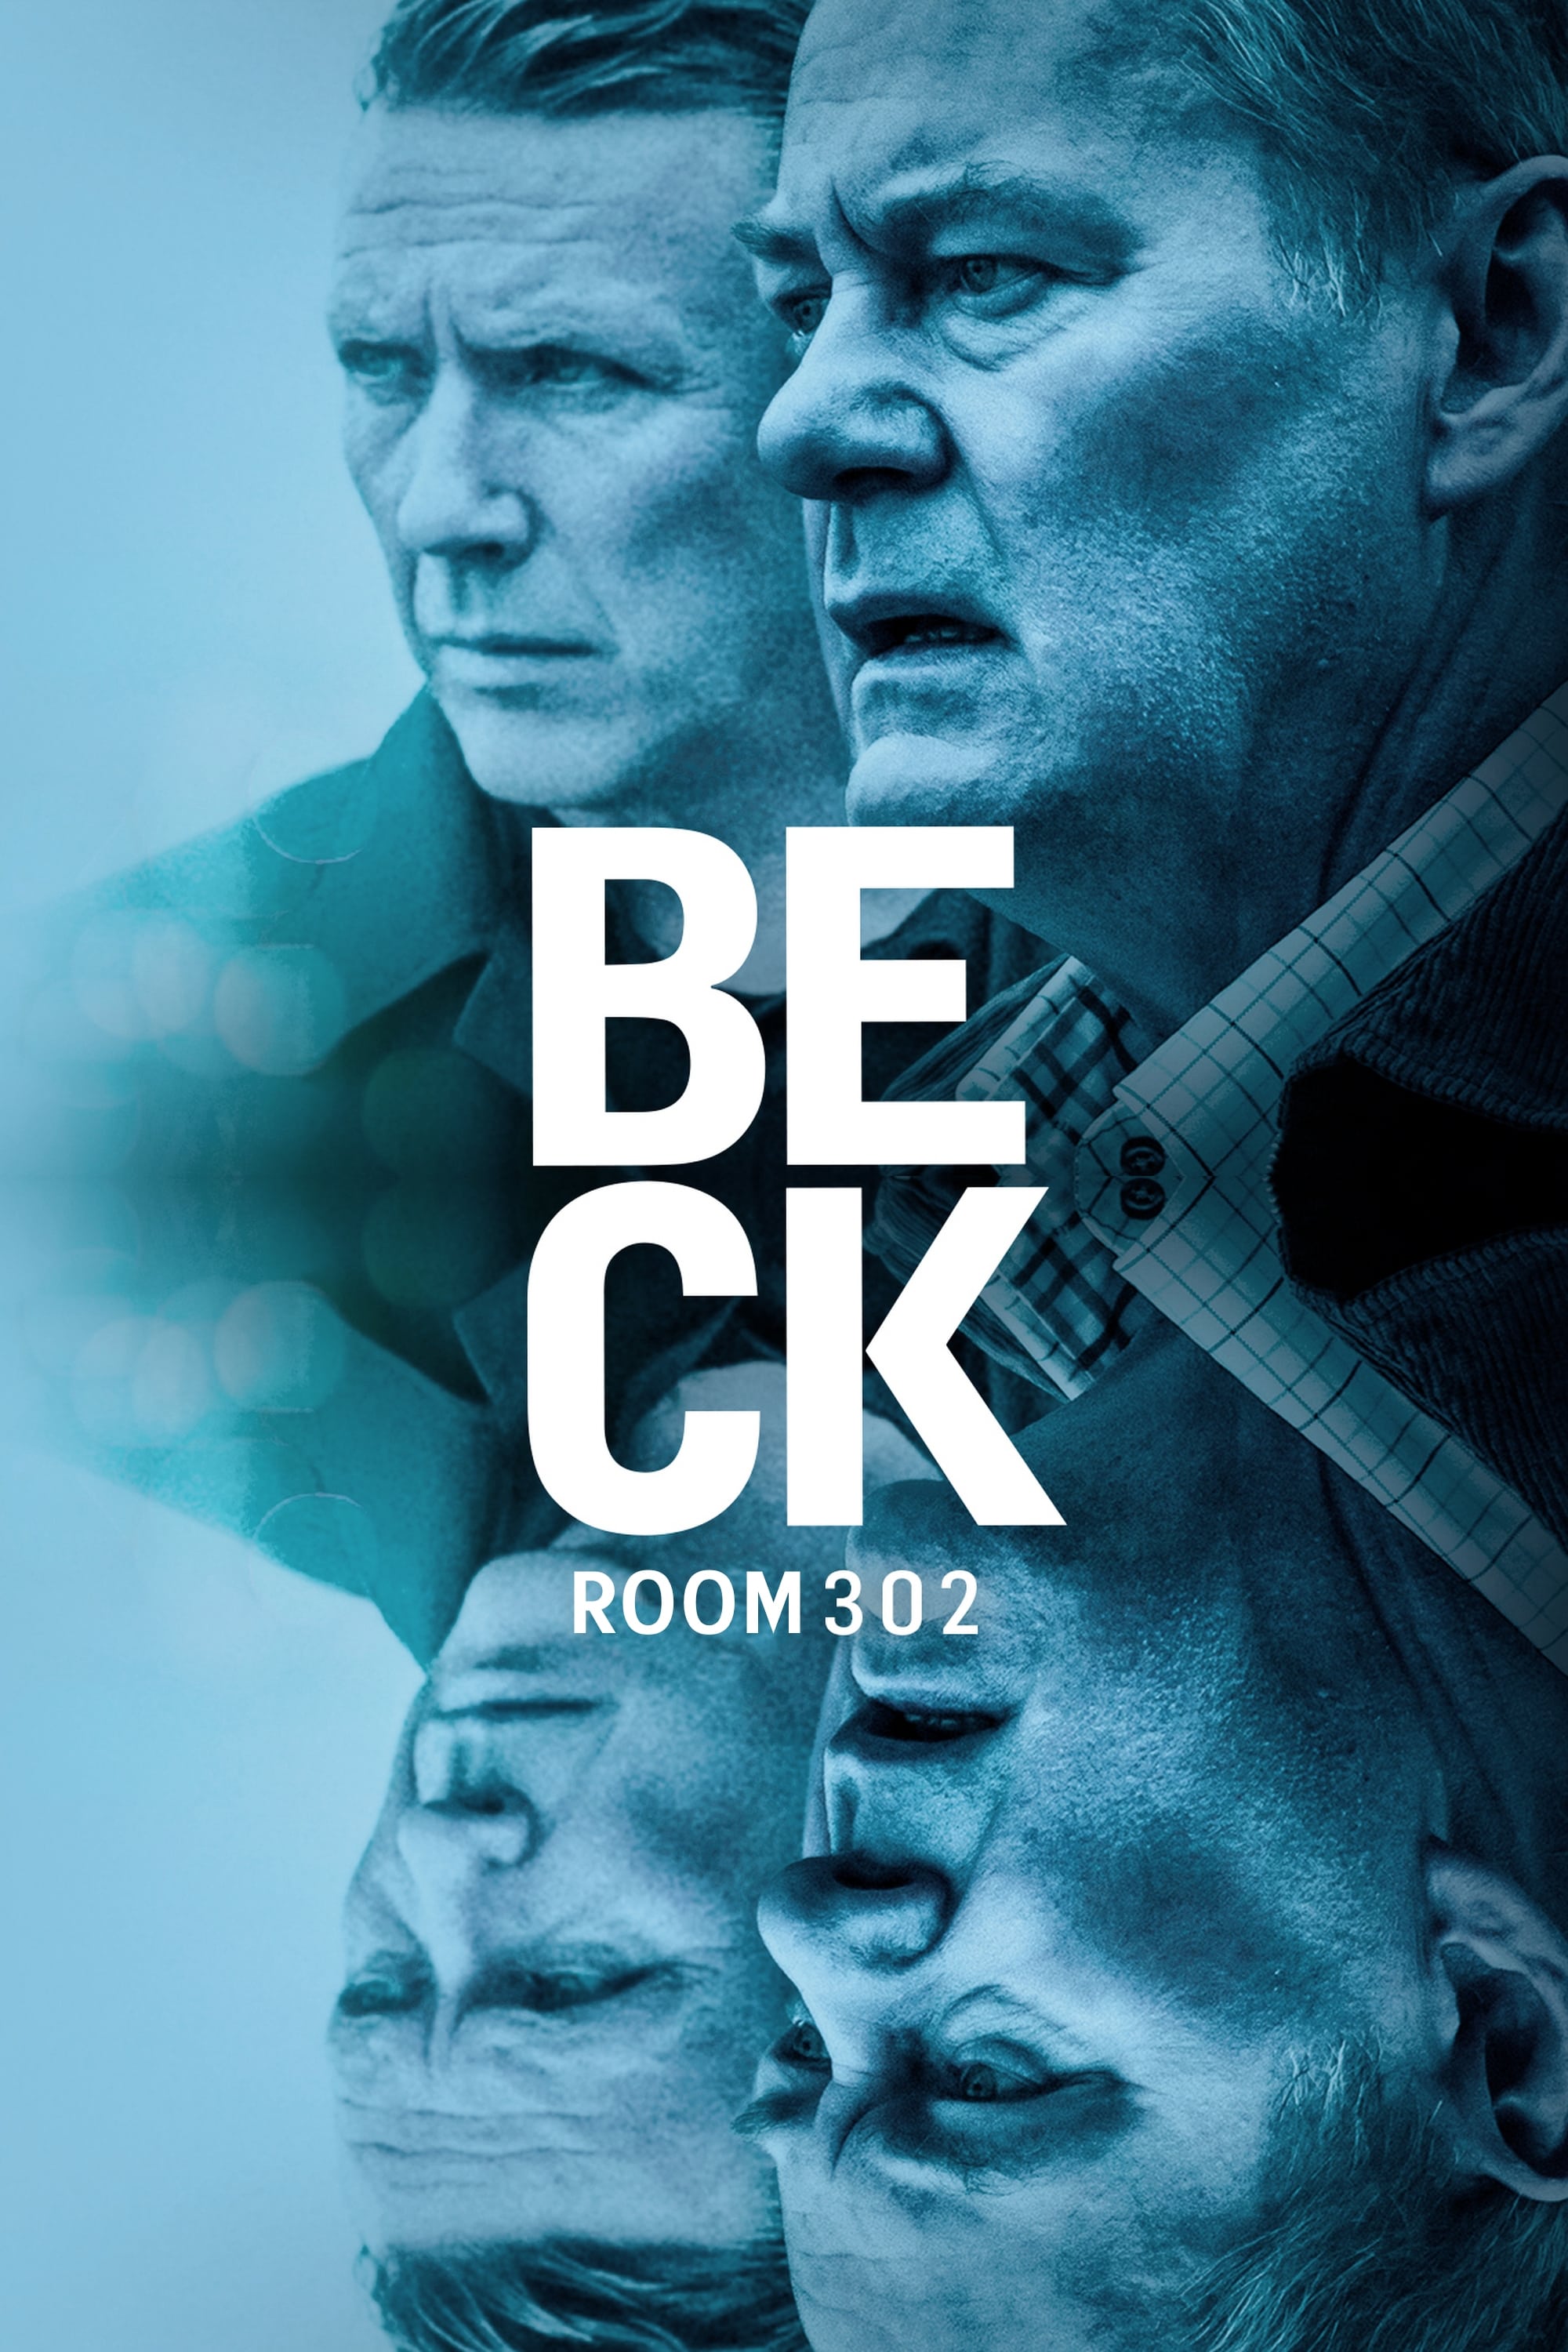 Beck 27 - Room 302 (2015)